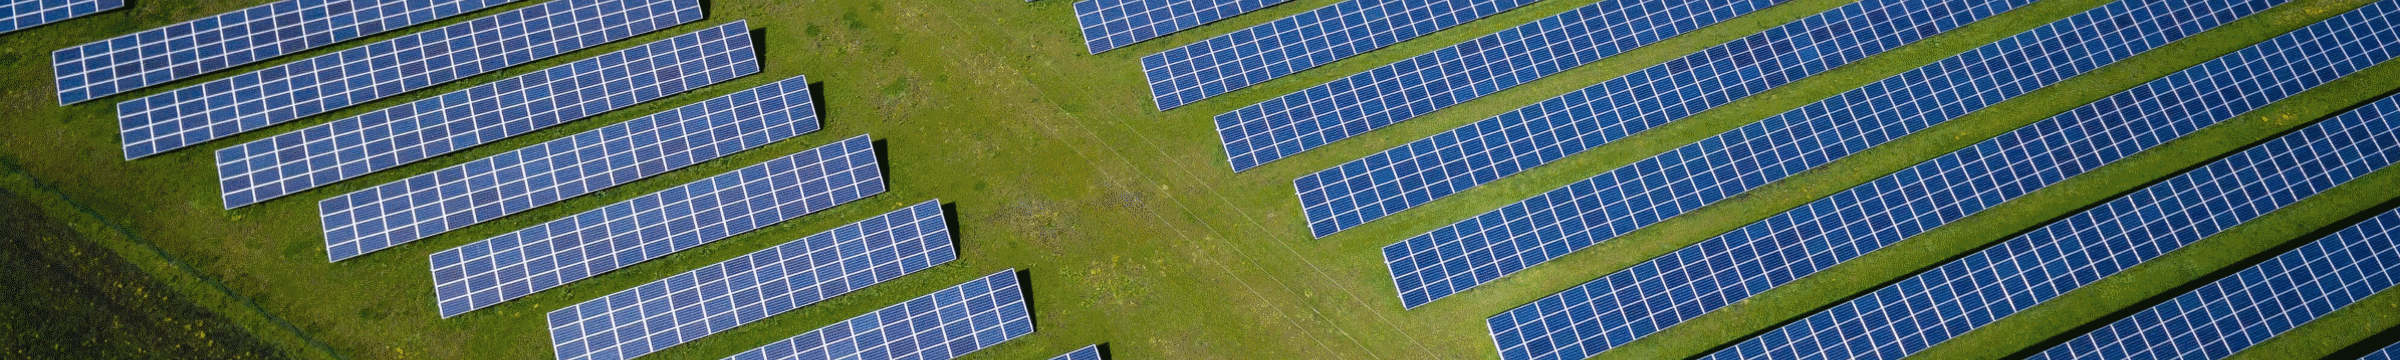 Rows of solar panels 